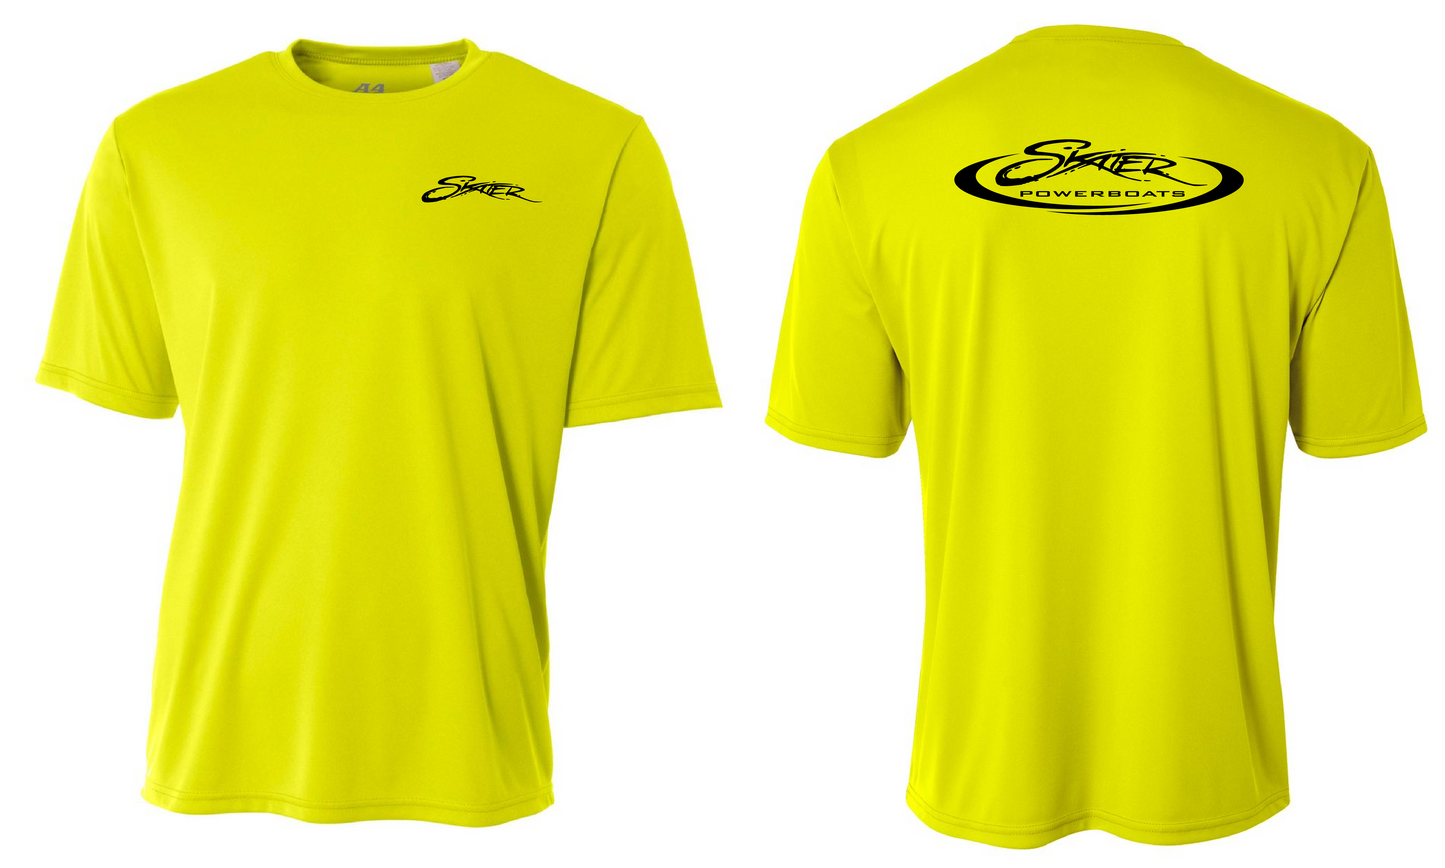 Neon A4 100% Polyester UPF T-Shirt